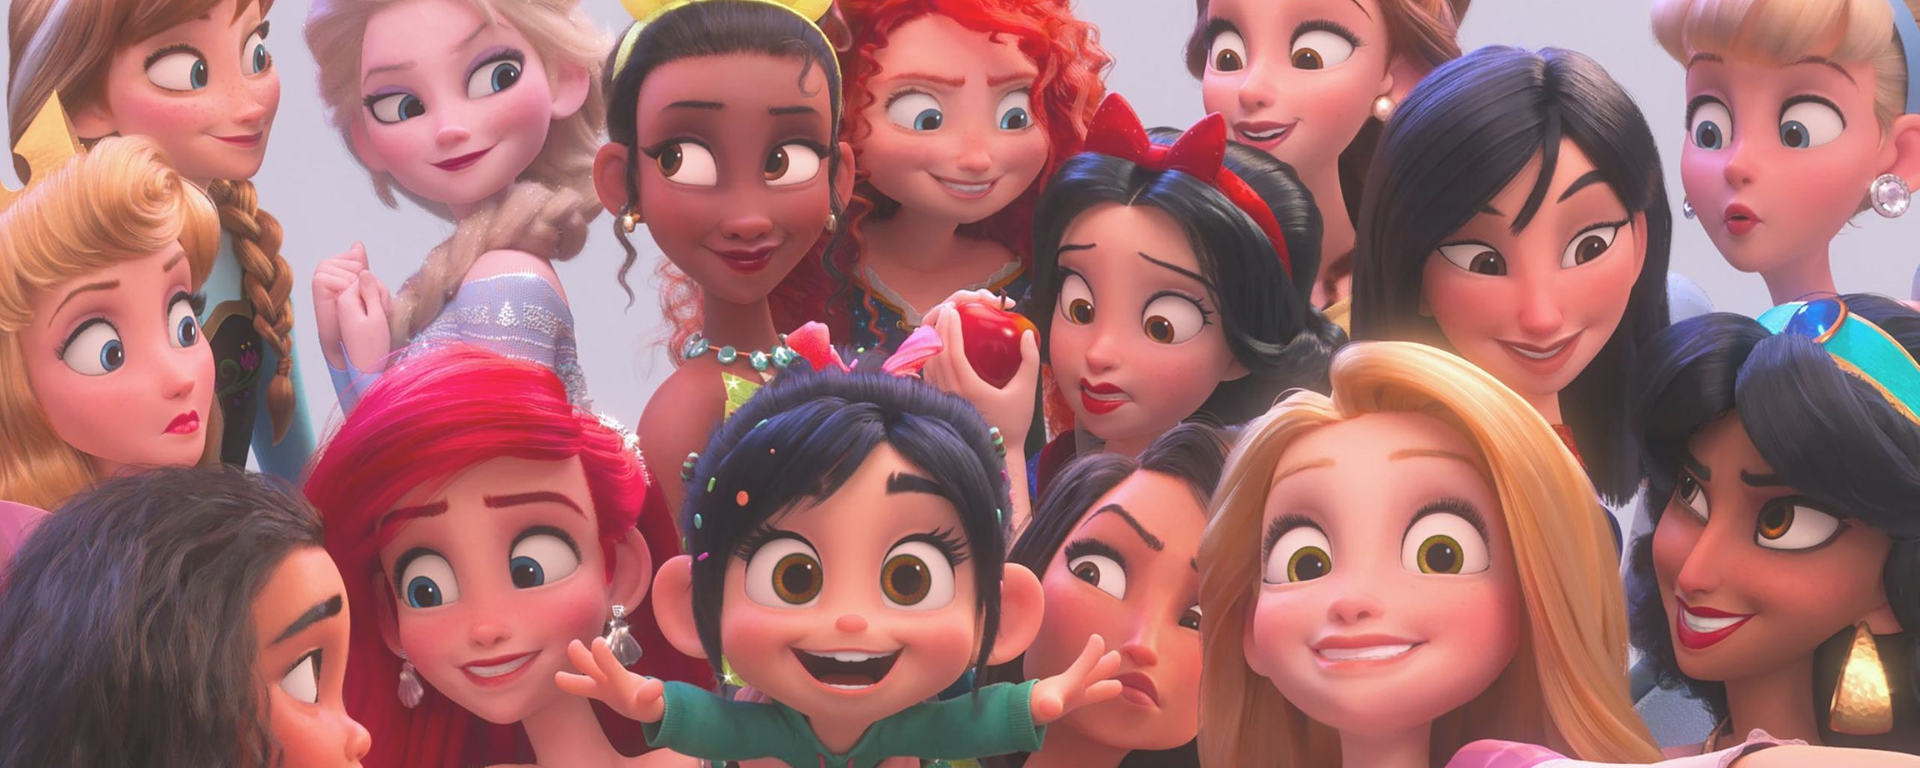 Disney princesses in "Ralph Breaks the Internet"